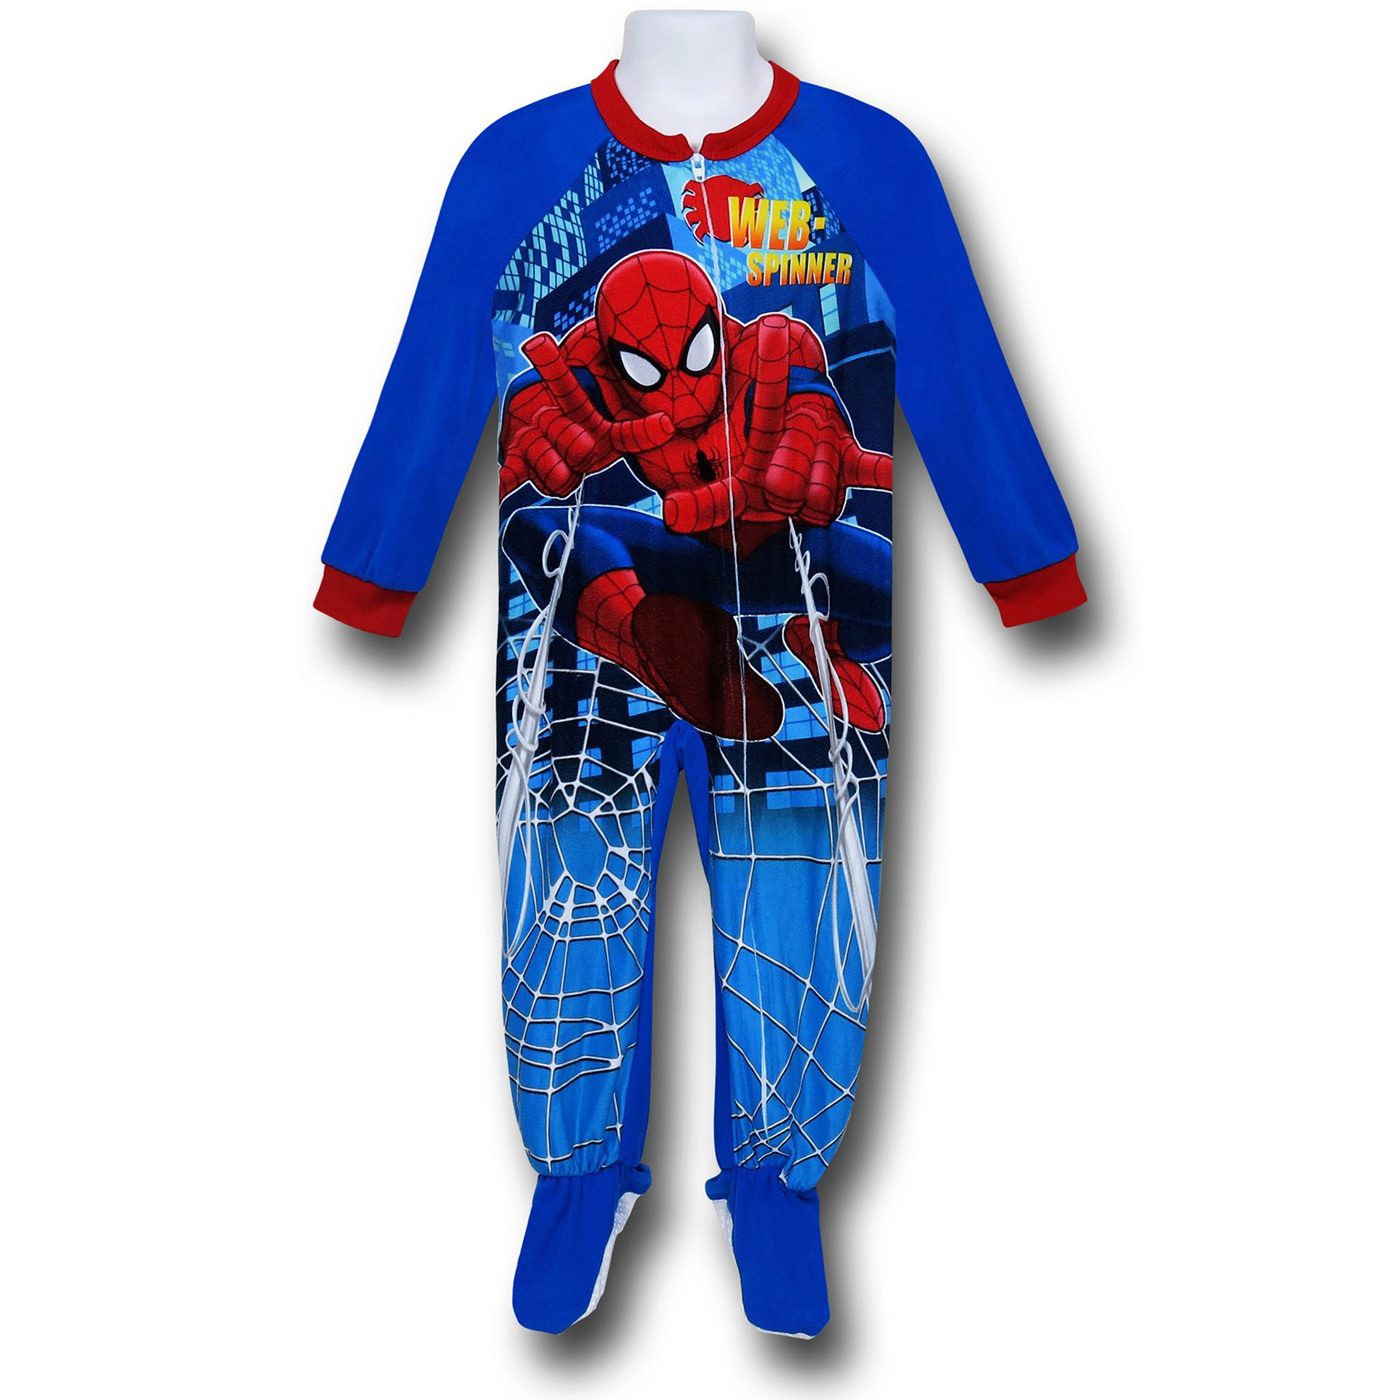 Spiderman Web-Spinner Kids Footed Pajamas